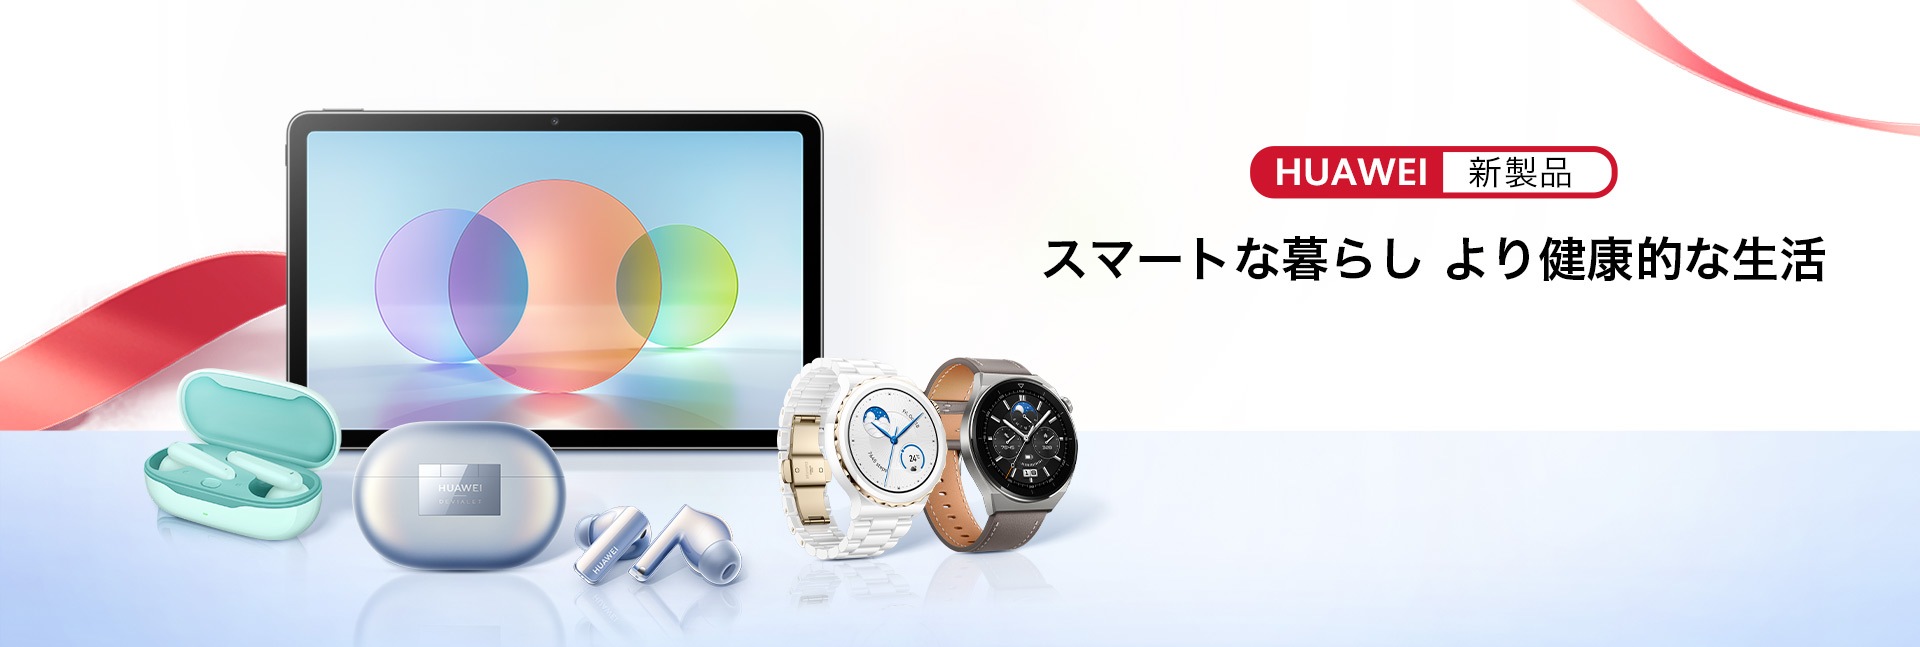 huawei jp new product launch pc 3